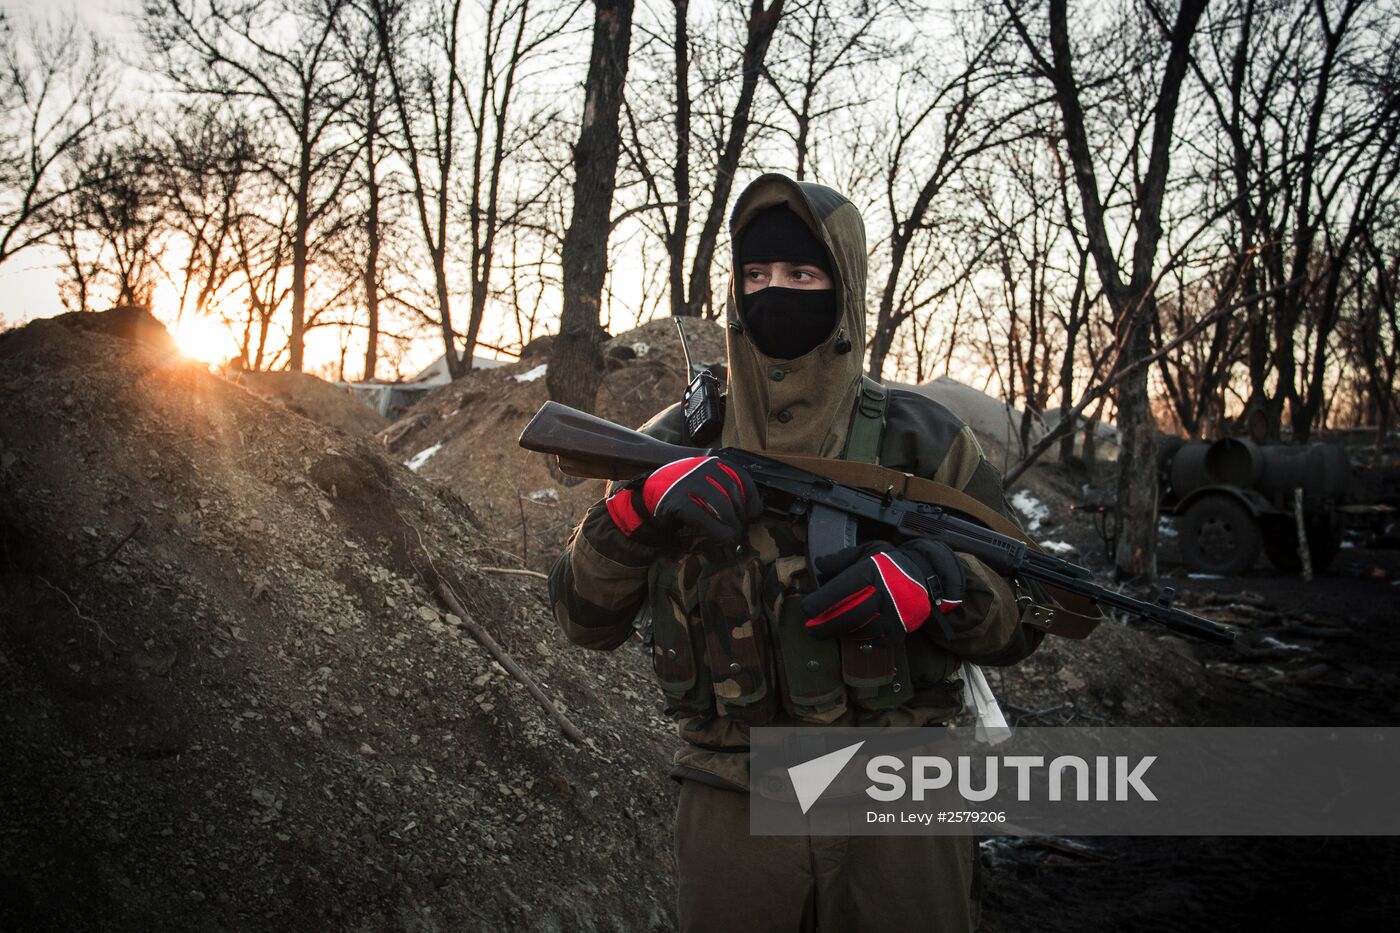 DPR self-defense fighters in the Donetsk Region